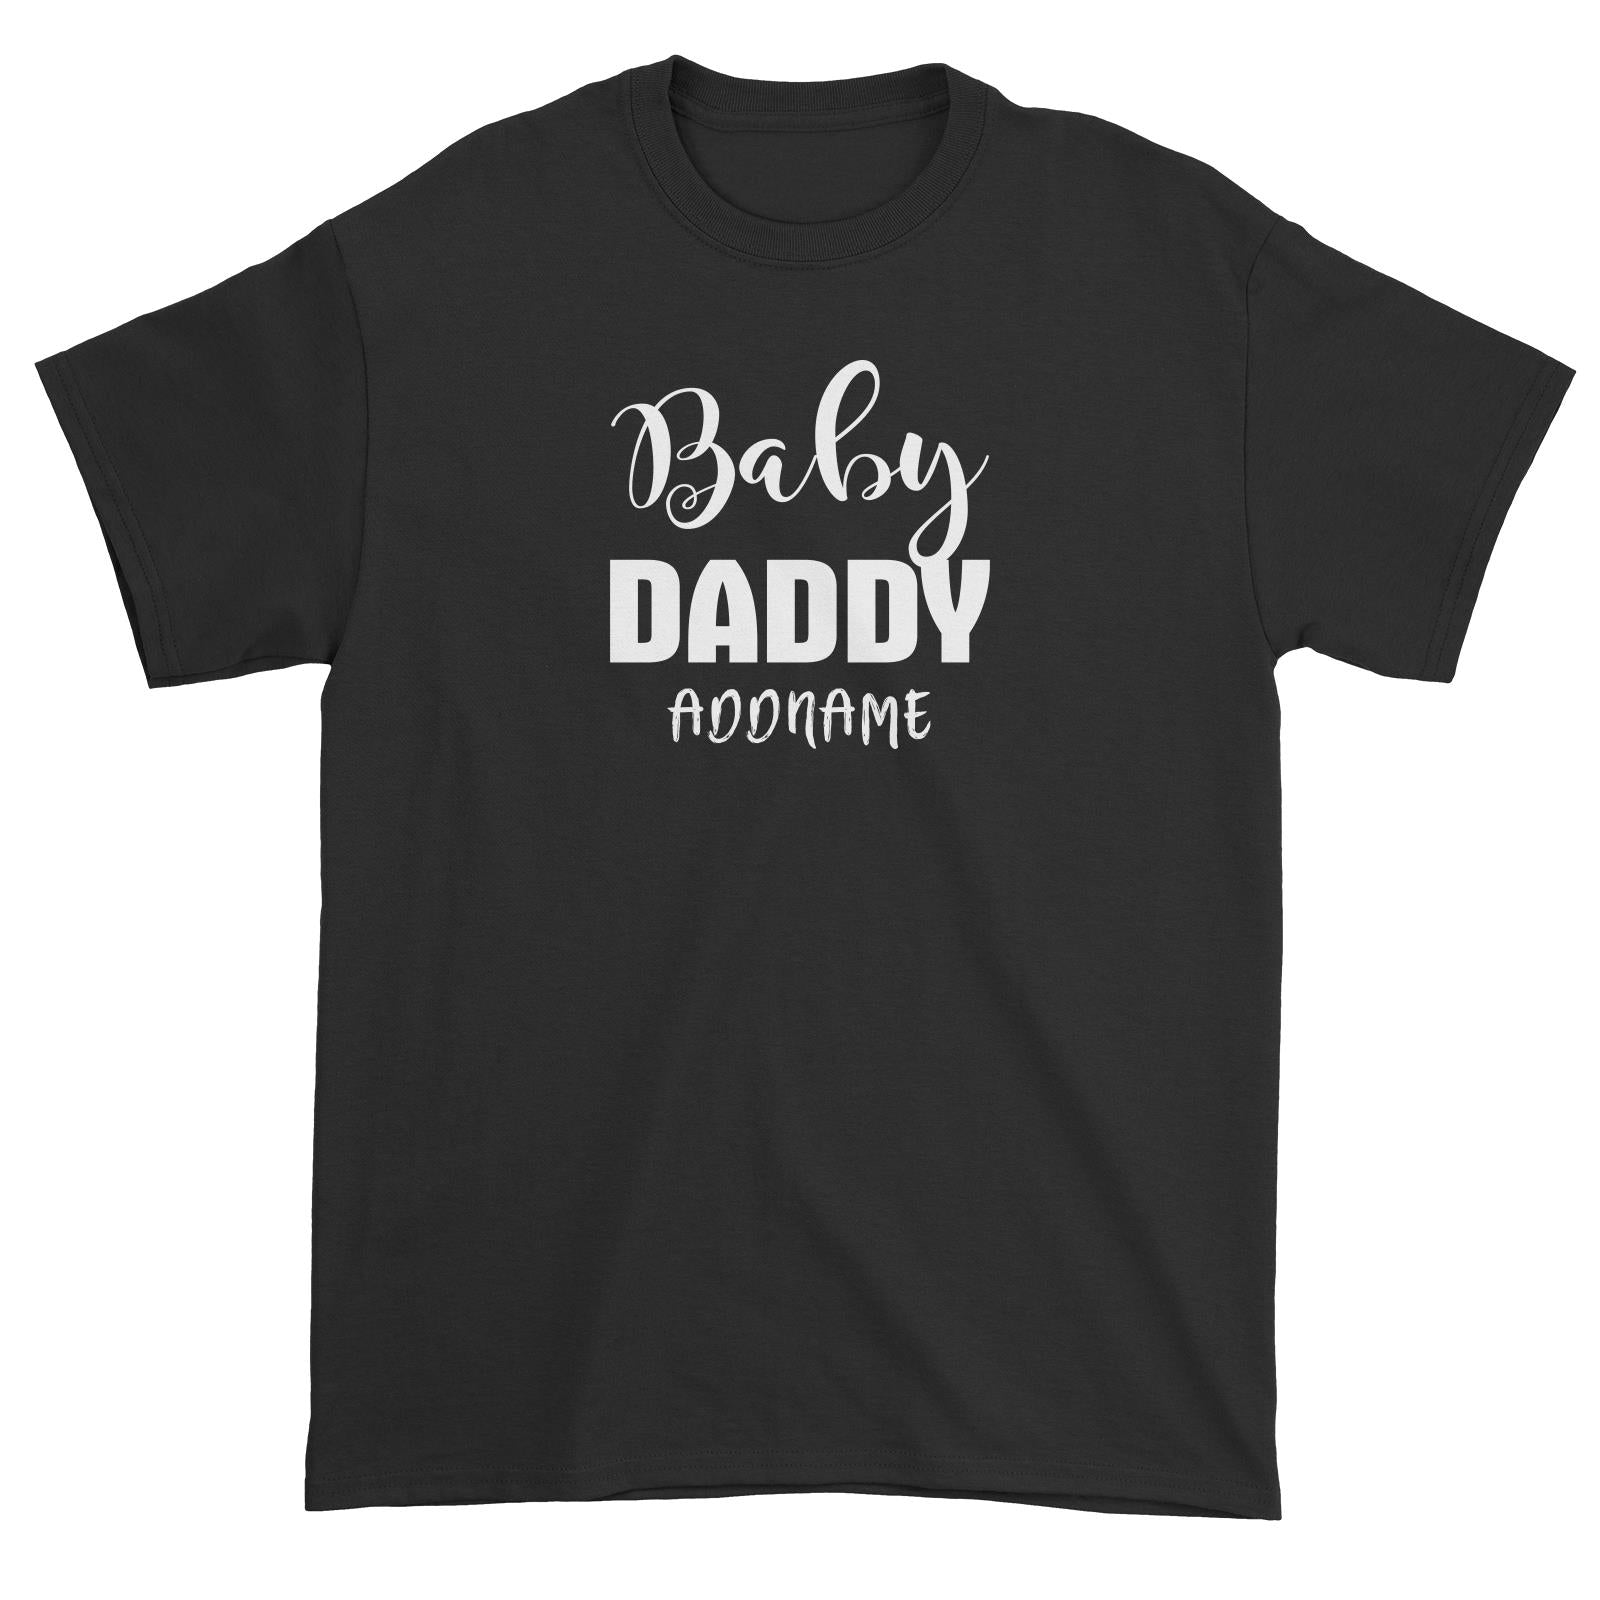 Baby Daddy Unisex T-Shirt